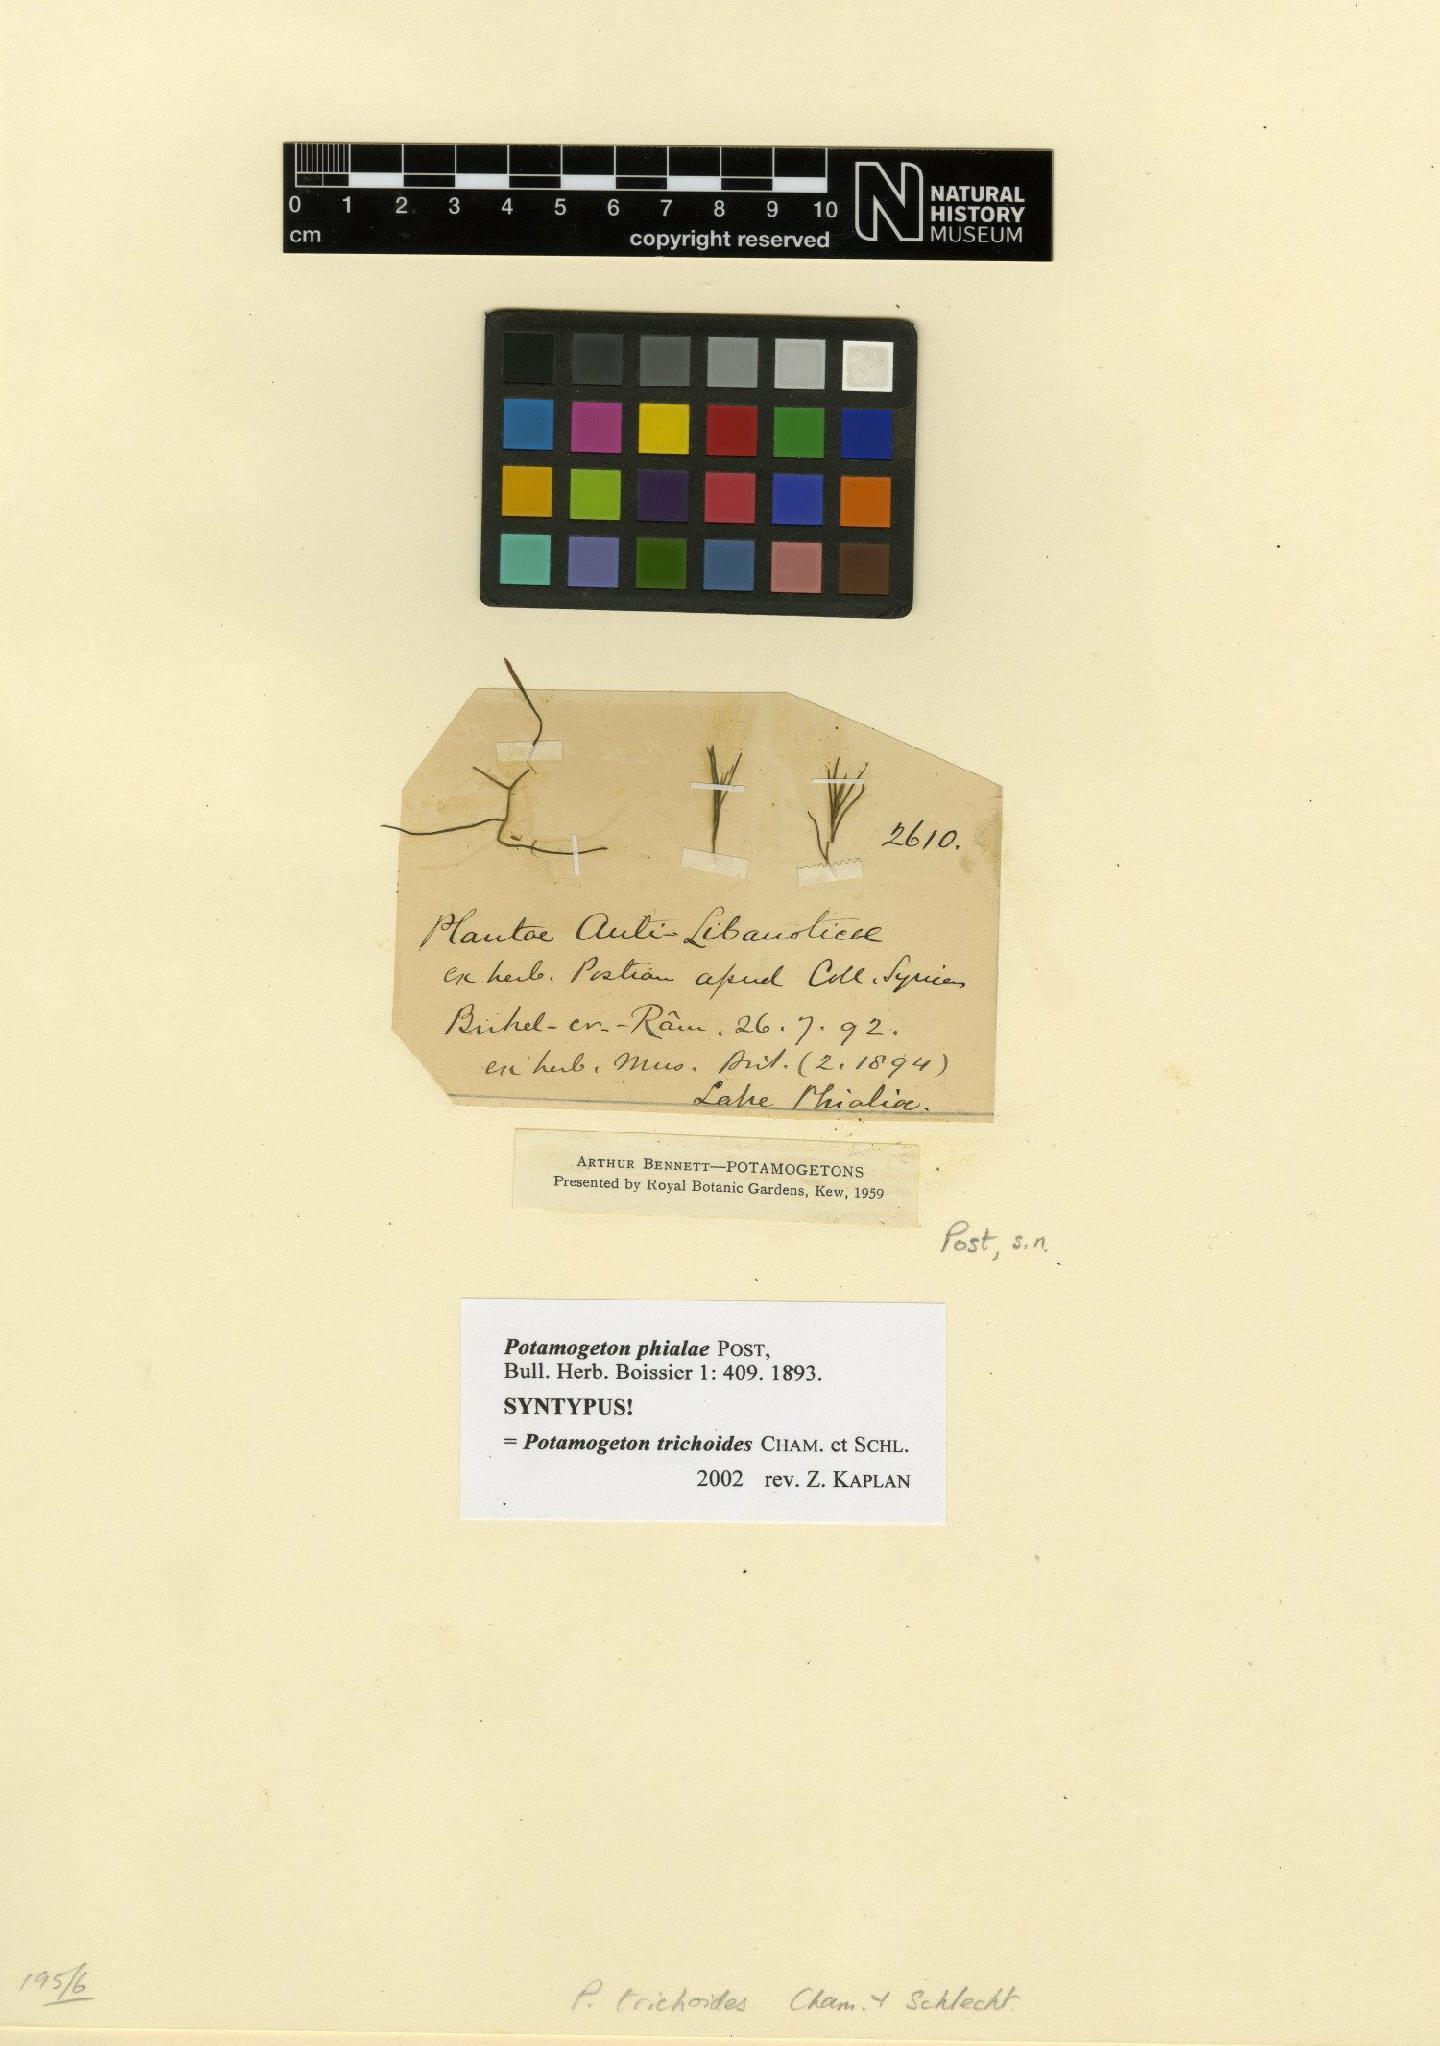 To NHMUK collection (Potamogeton trichoides Cham. & Schltdl.; Syntype; NHMUK:ecatalogue:4967527)